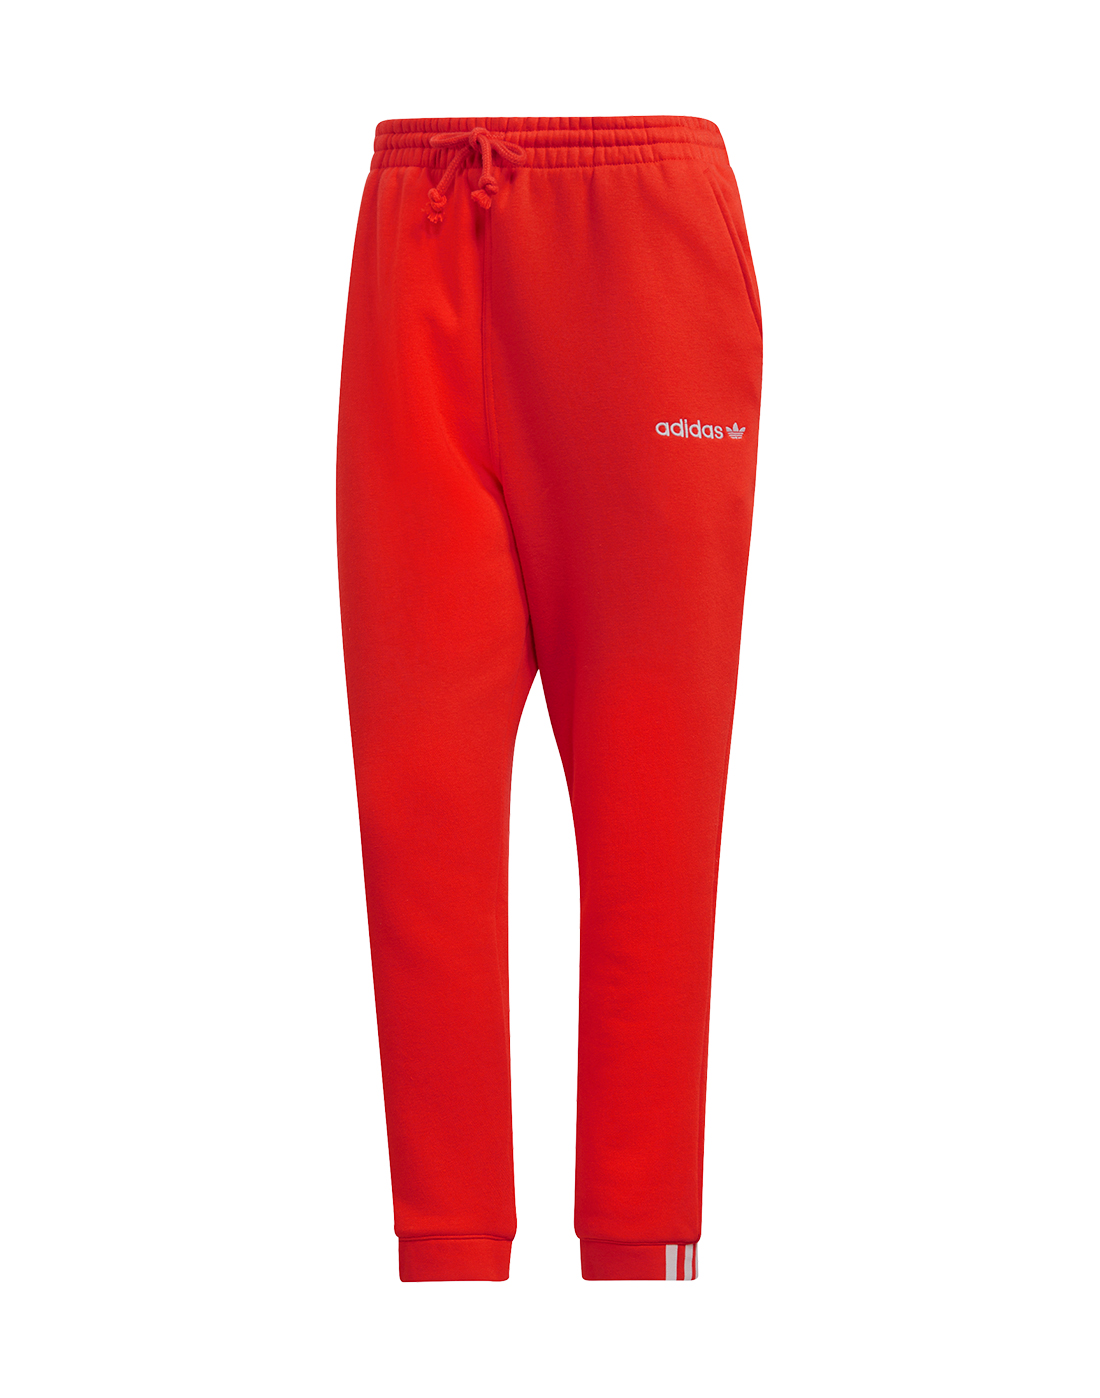 Women S Red Adidas Originals Coeeze Pants Life Style Sports